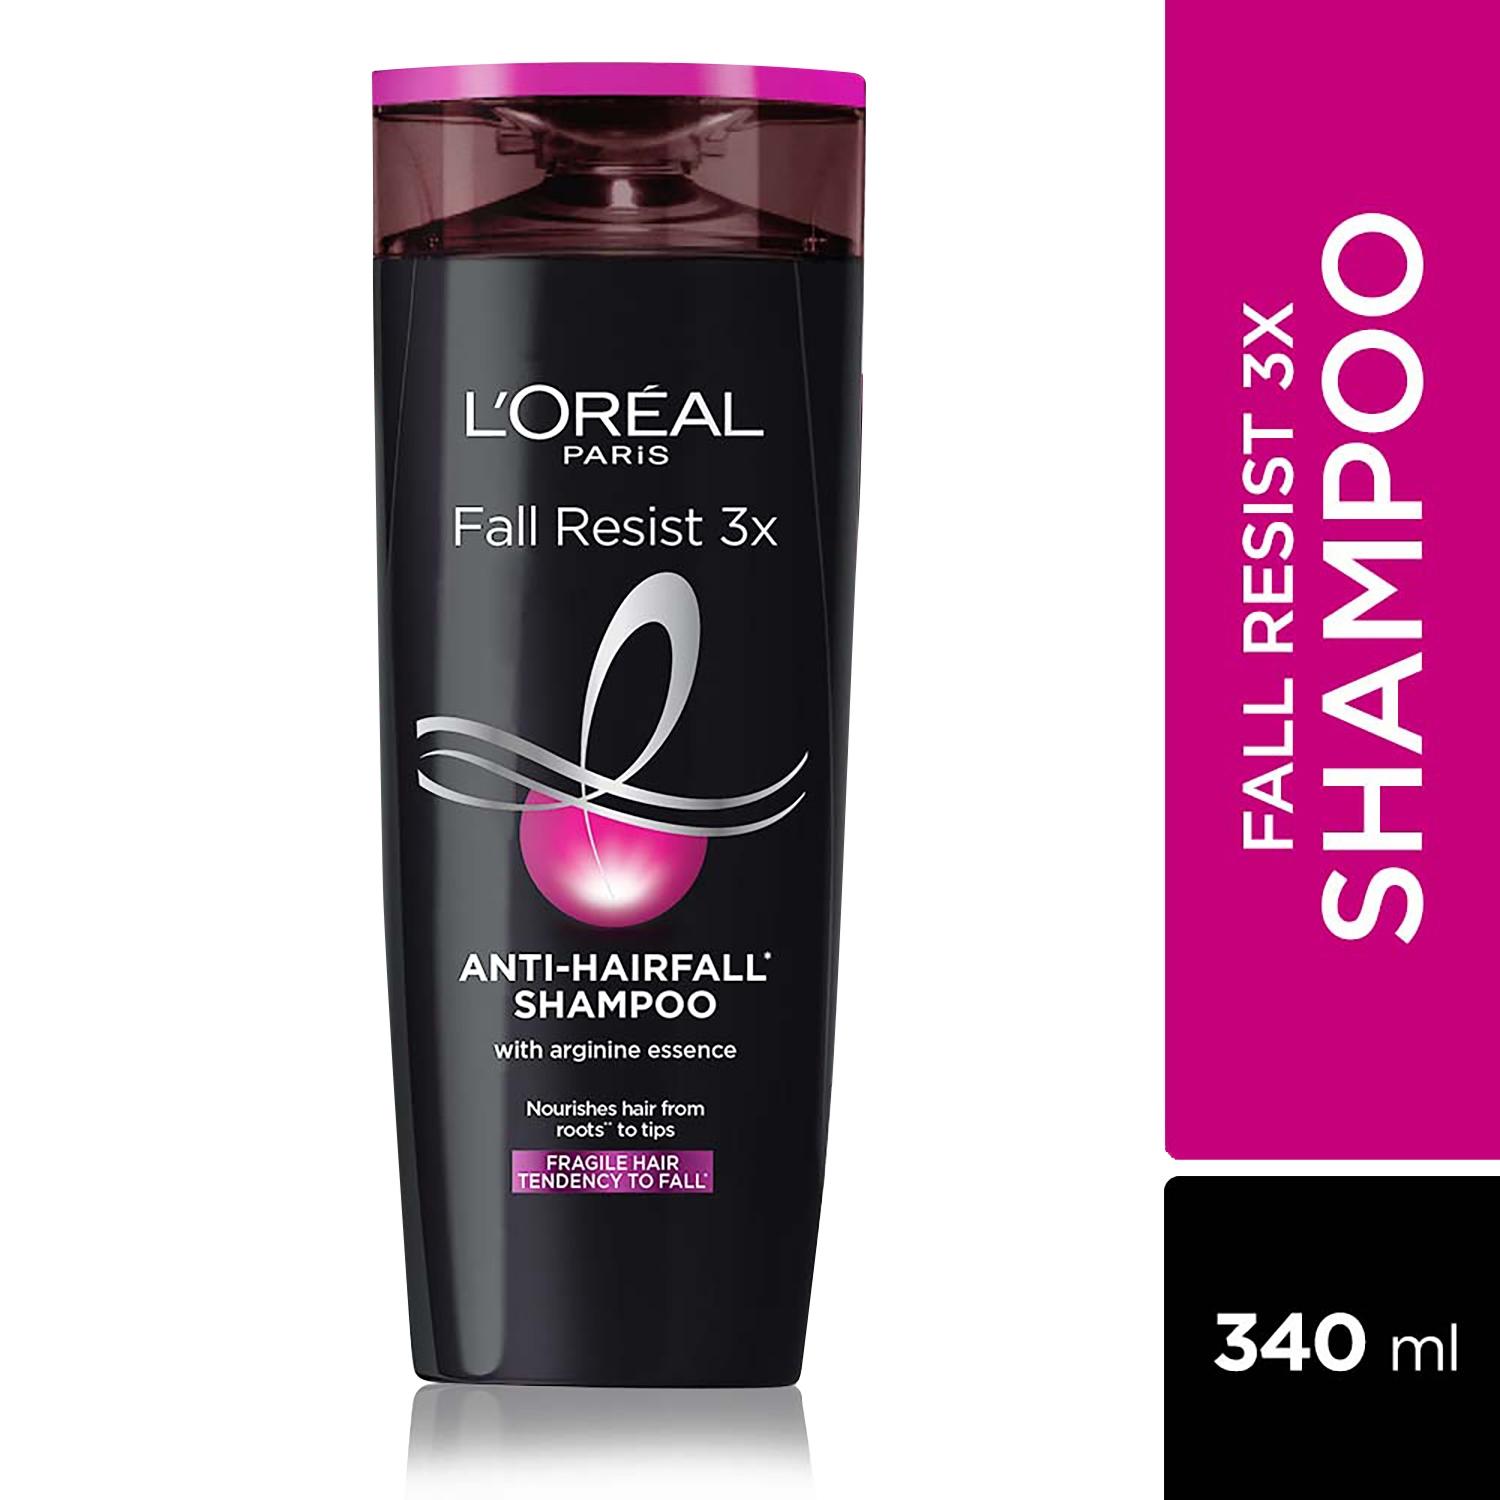 l'oreal-paris-fall-resist-3x-anti-hairfall-shampoo-(340ml)